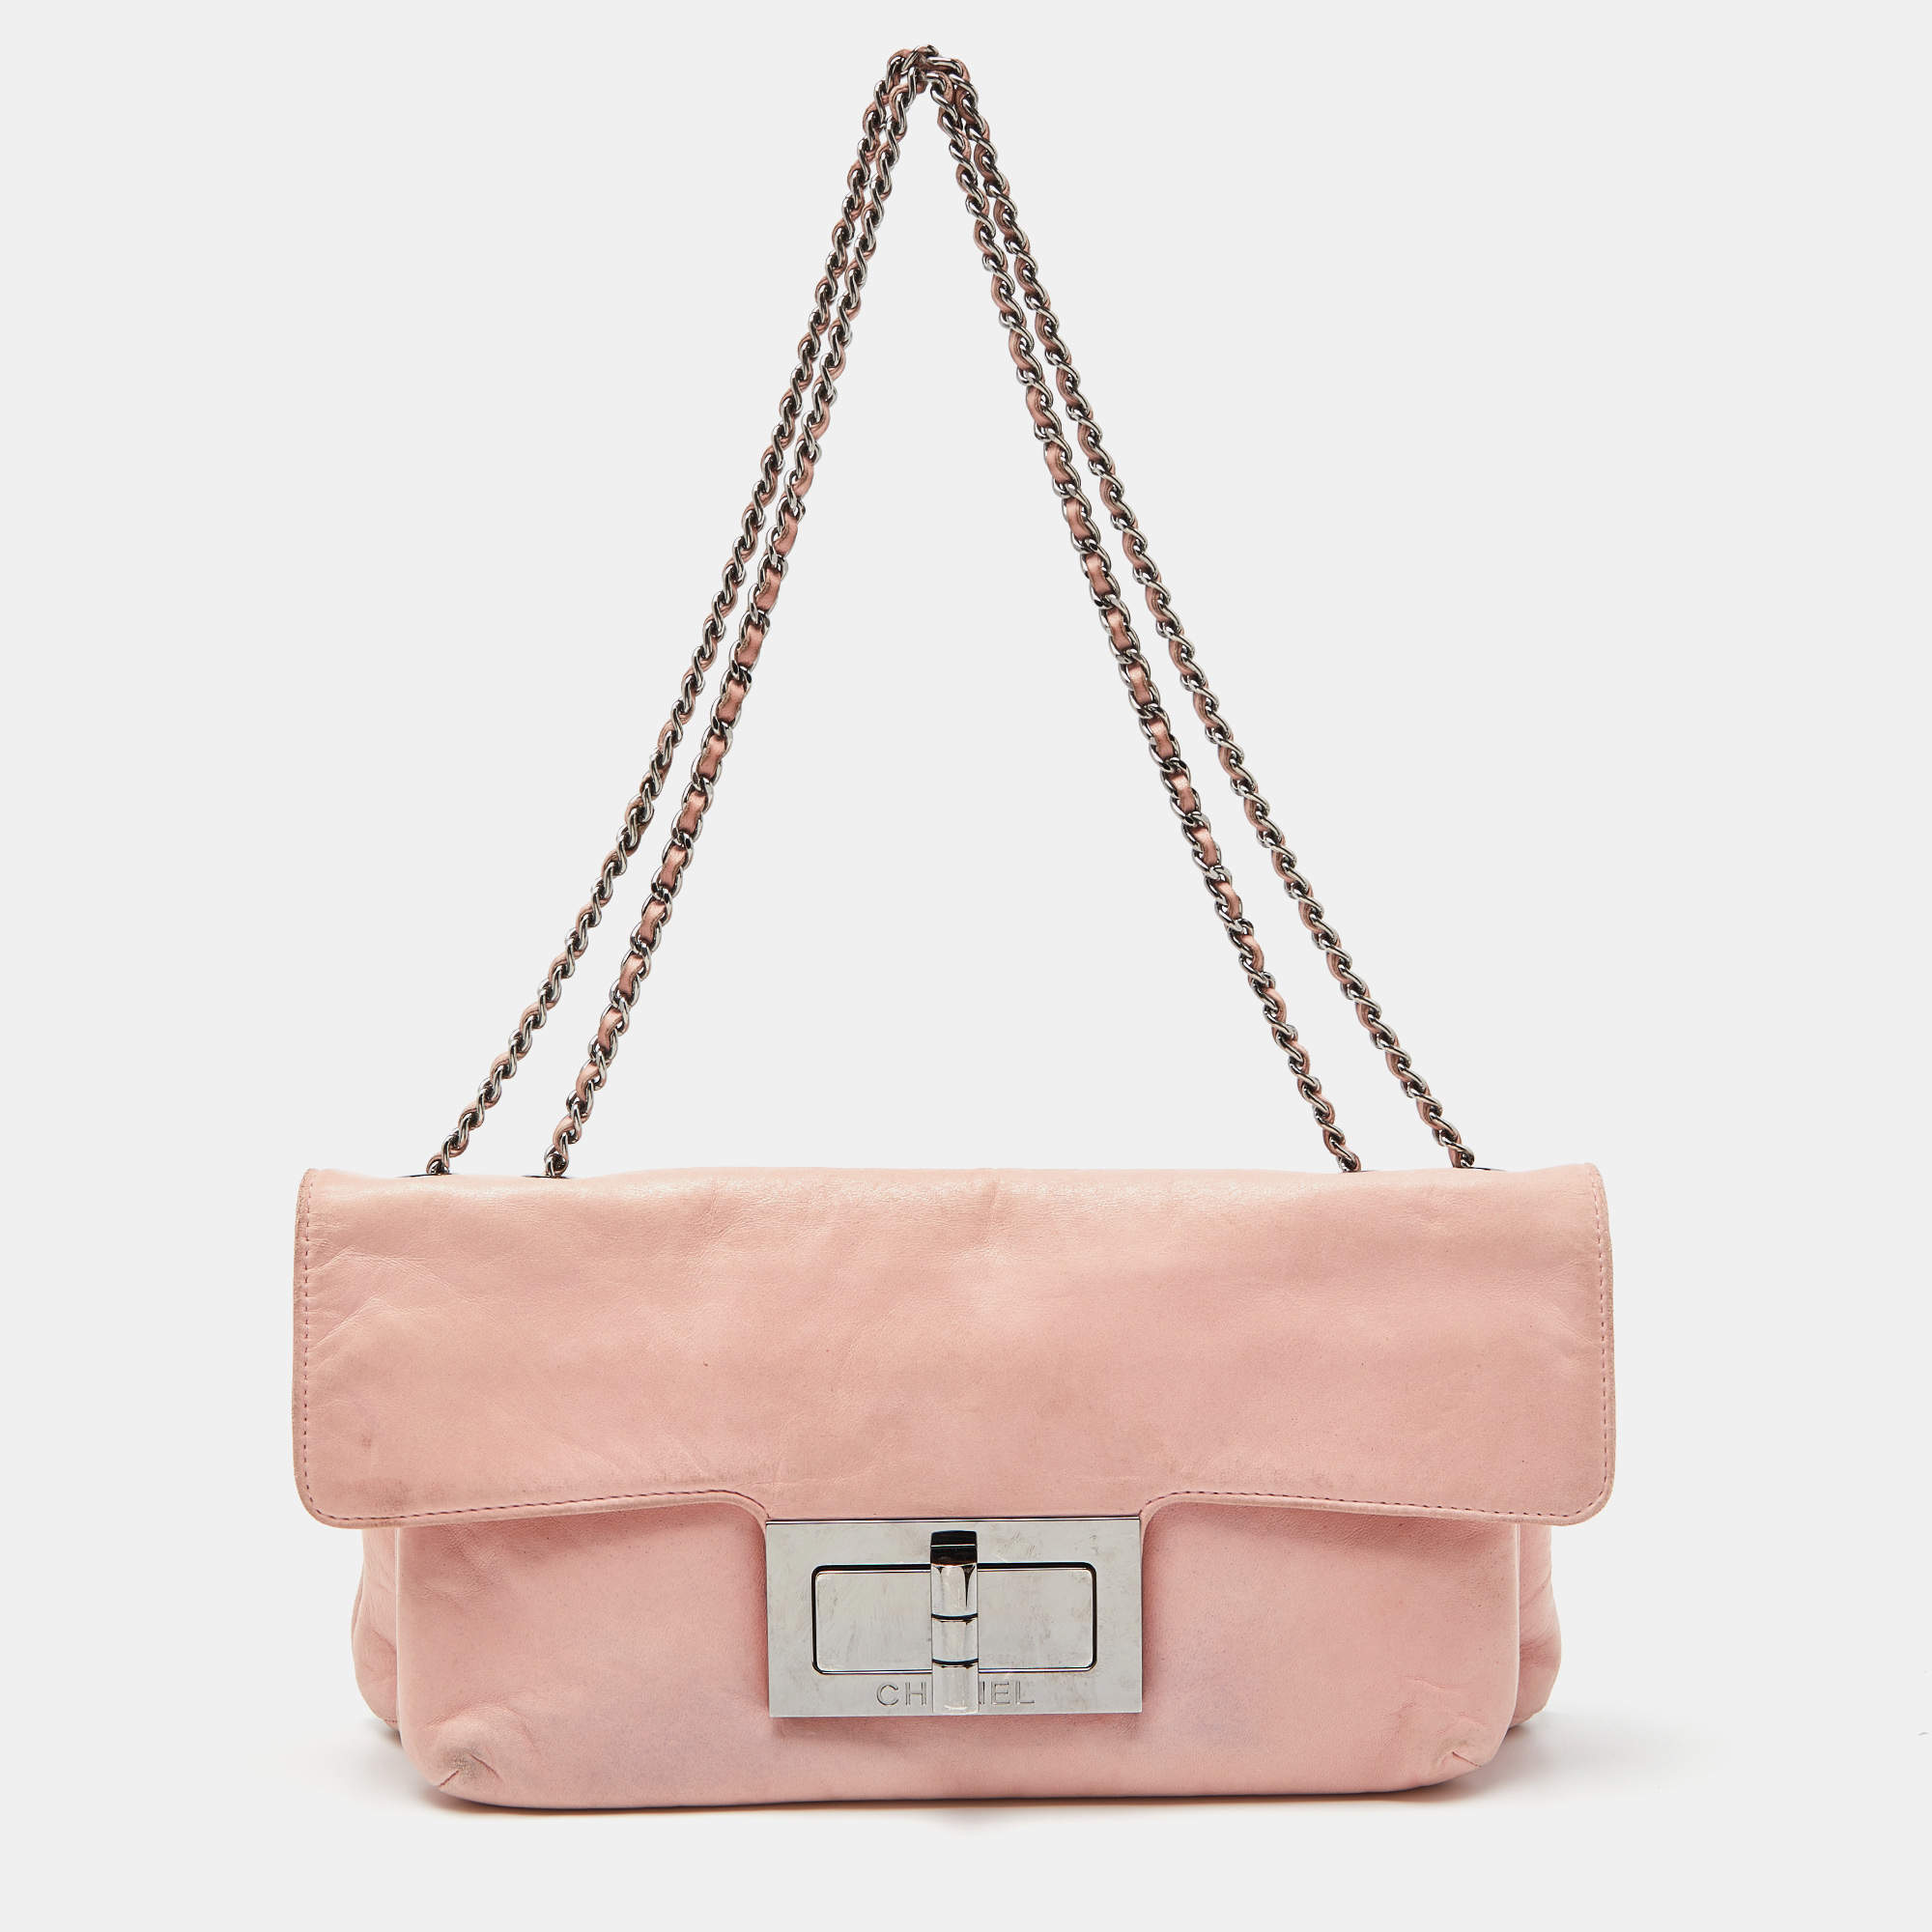 Chanel Pink Leather Mademoiselle Turn Lock Flap Bag